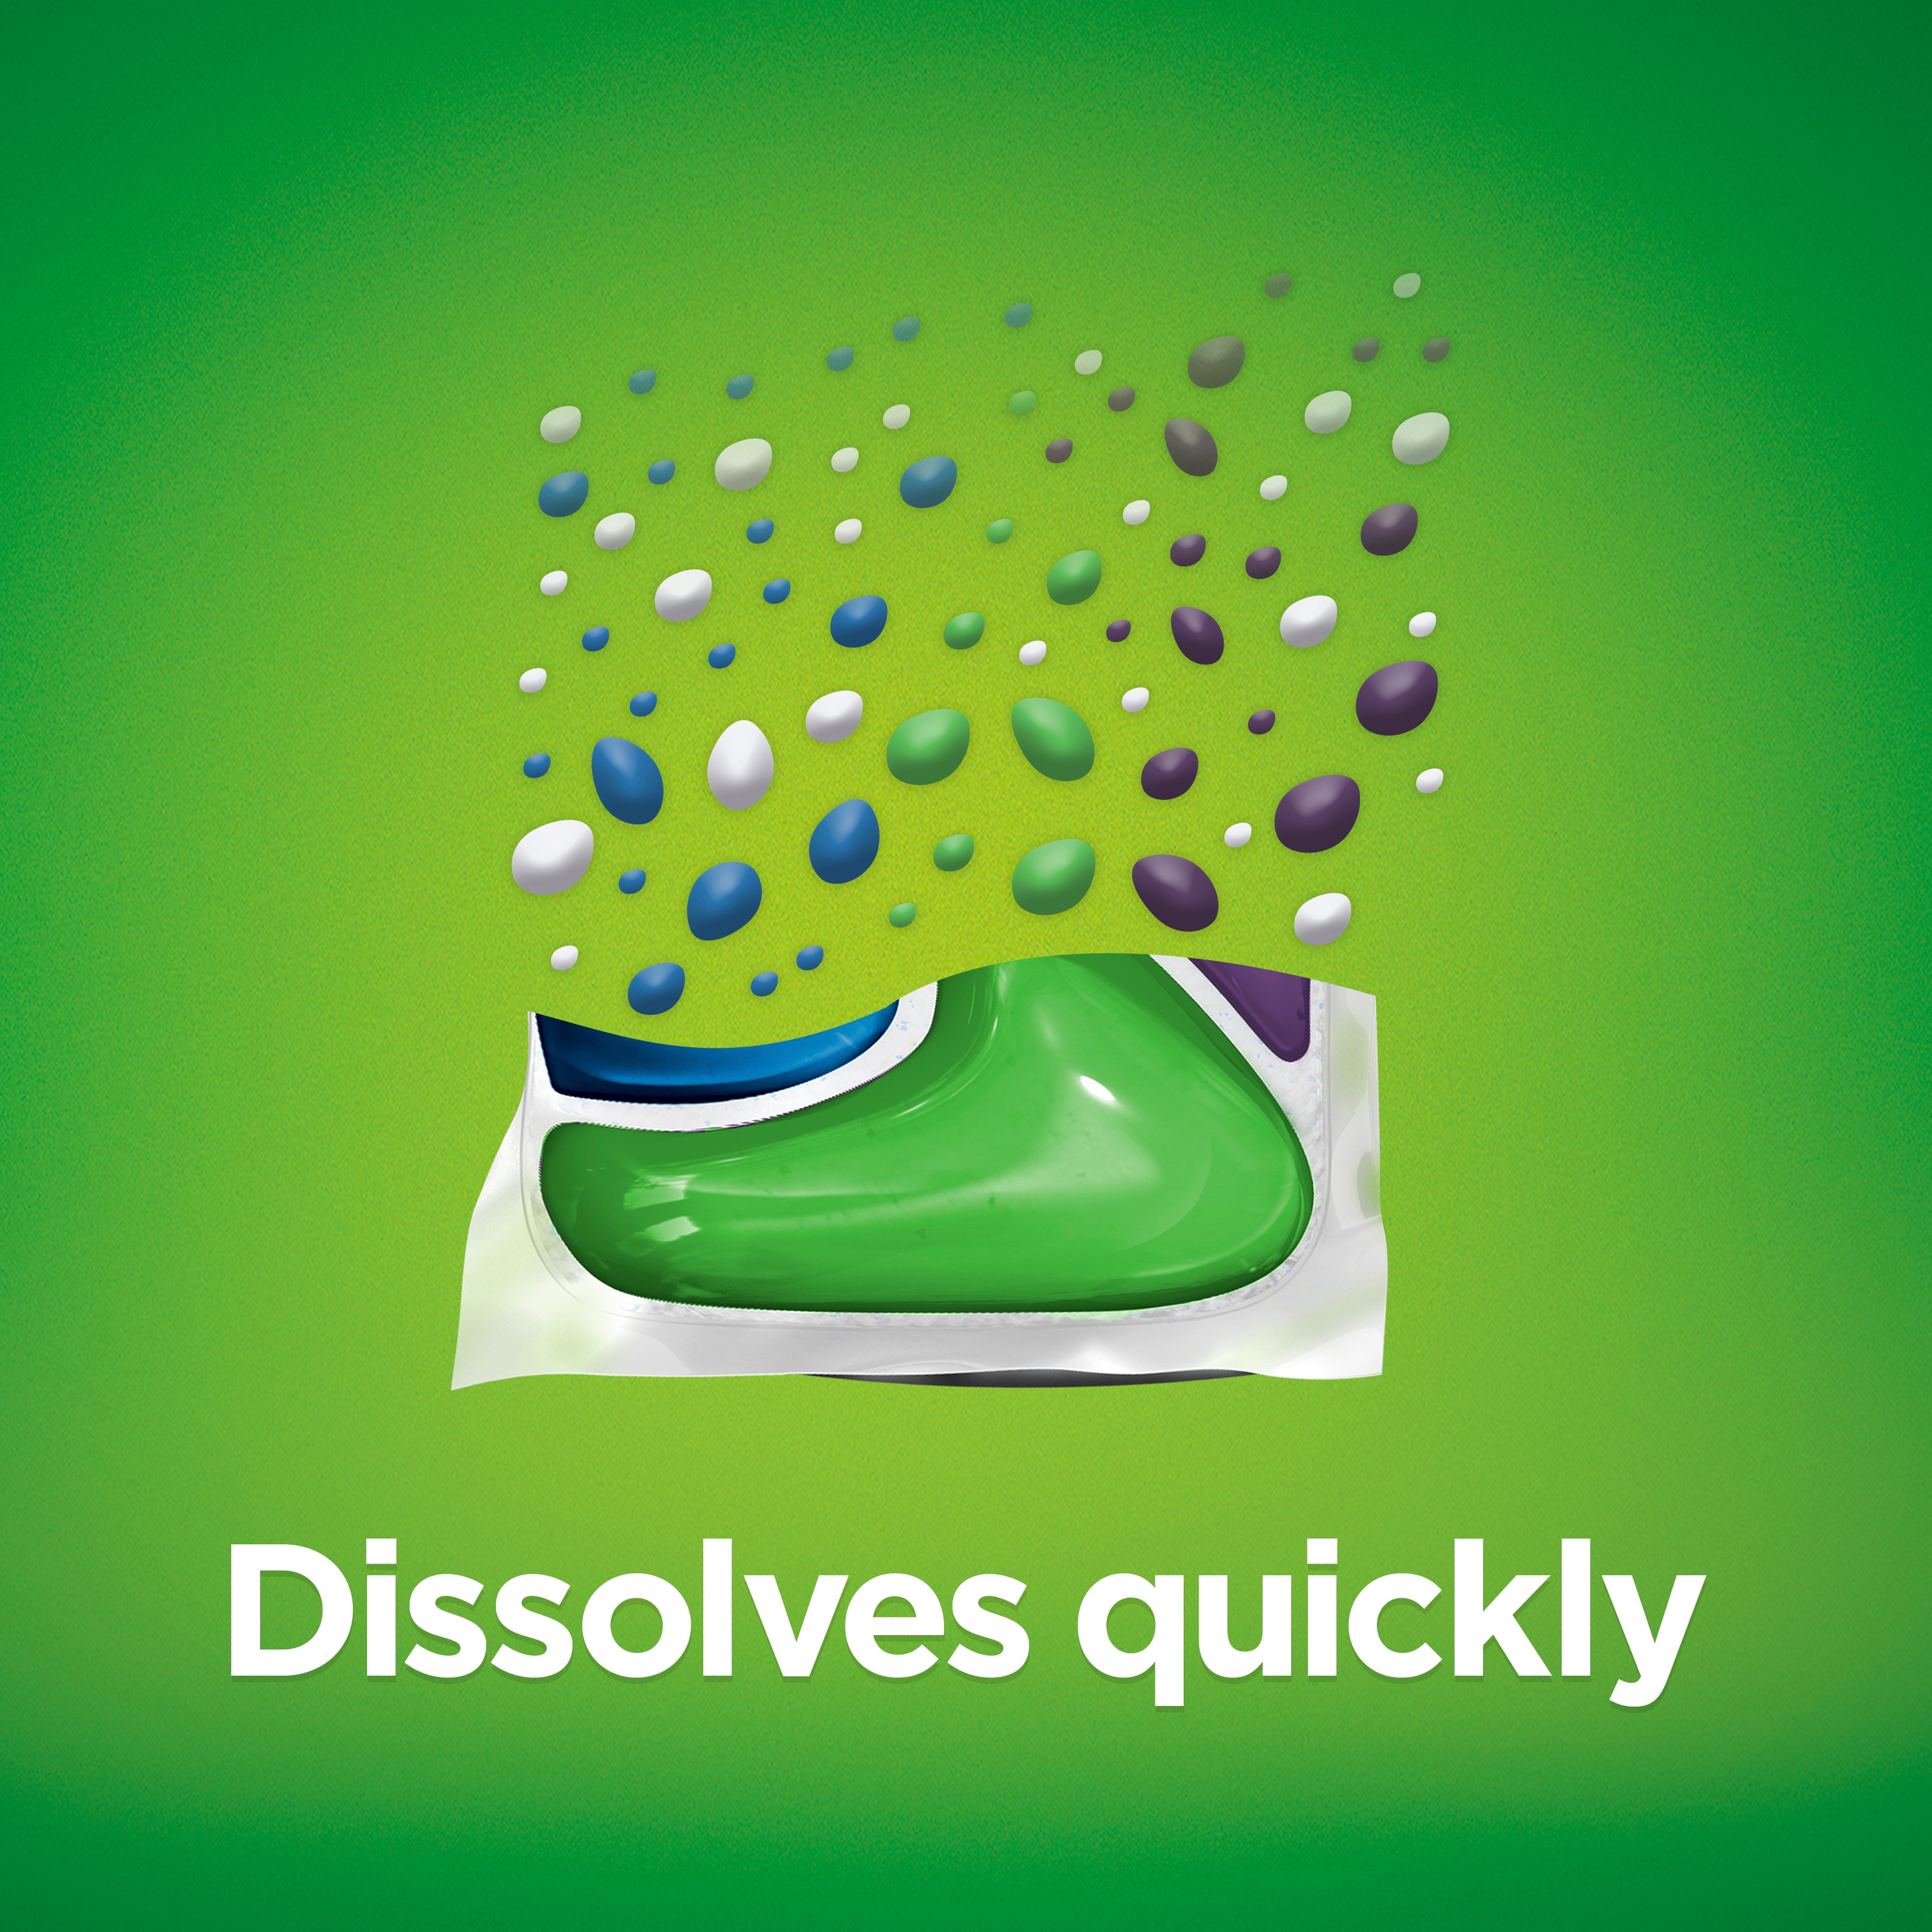 Cascade Platinum ActionPacs Lemon Scent Dishwasher Detergent Pods, 62 ct -  Fred Meyer